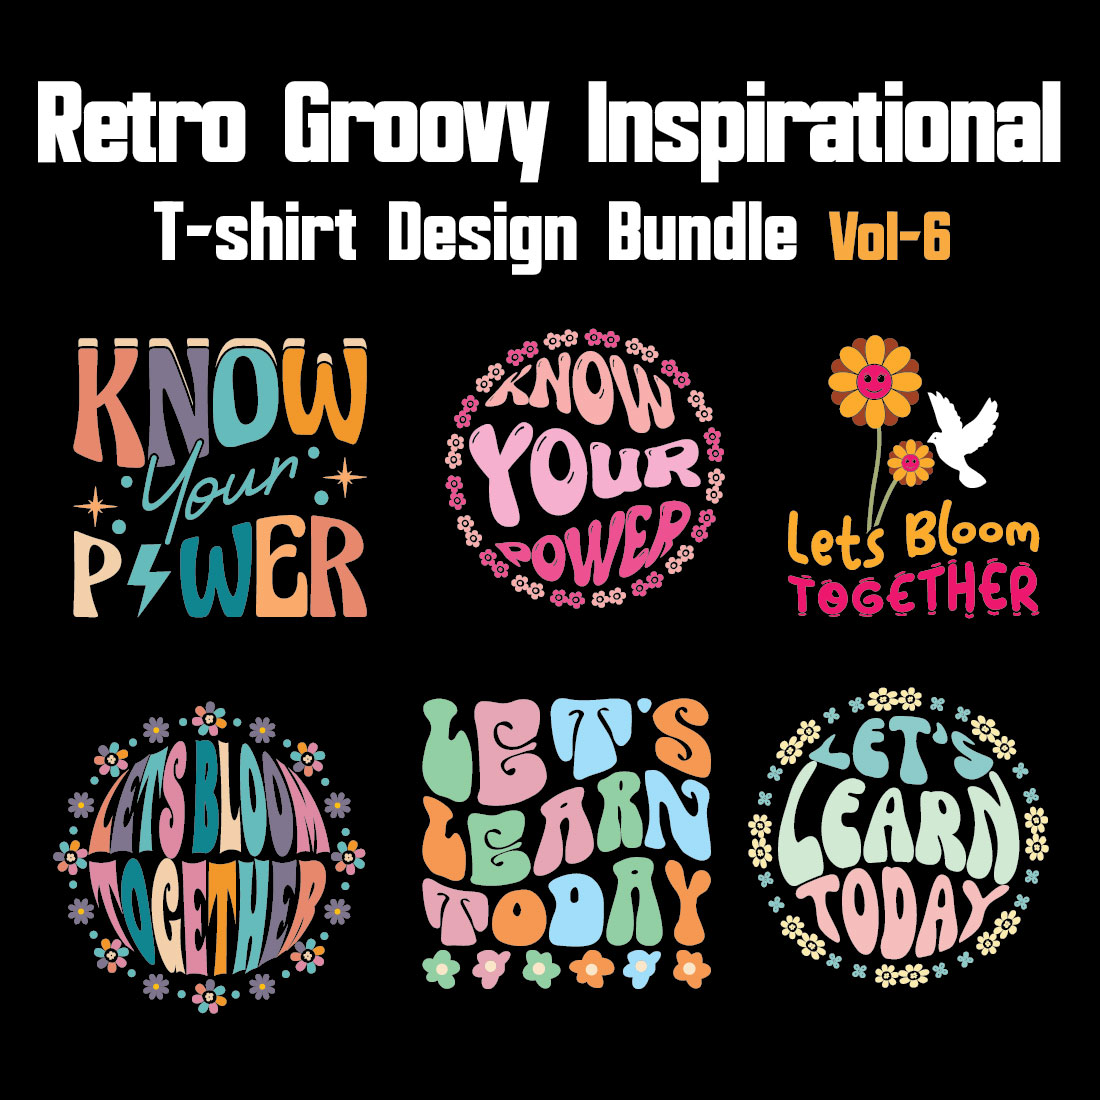 Retro Groovy Inspirational T-shirt Design Bundle Vol-6 cover image.